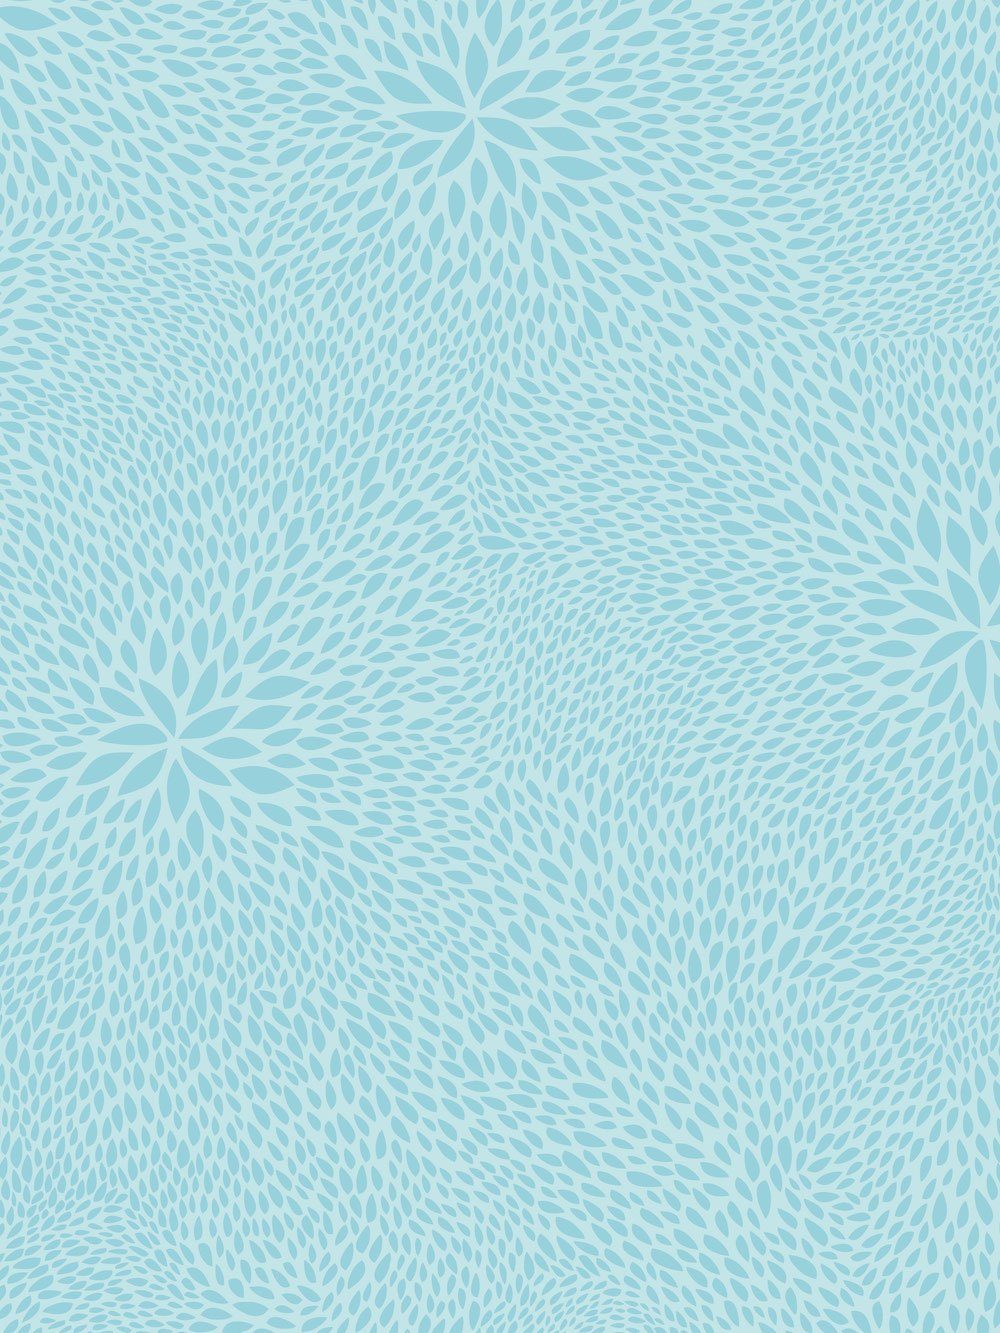 701 Muster H-Erzmade Zeichenpapier Décopatch-Papier hellblau Blütenblätter